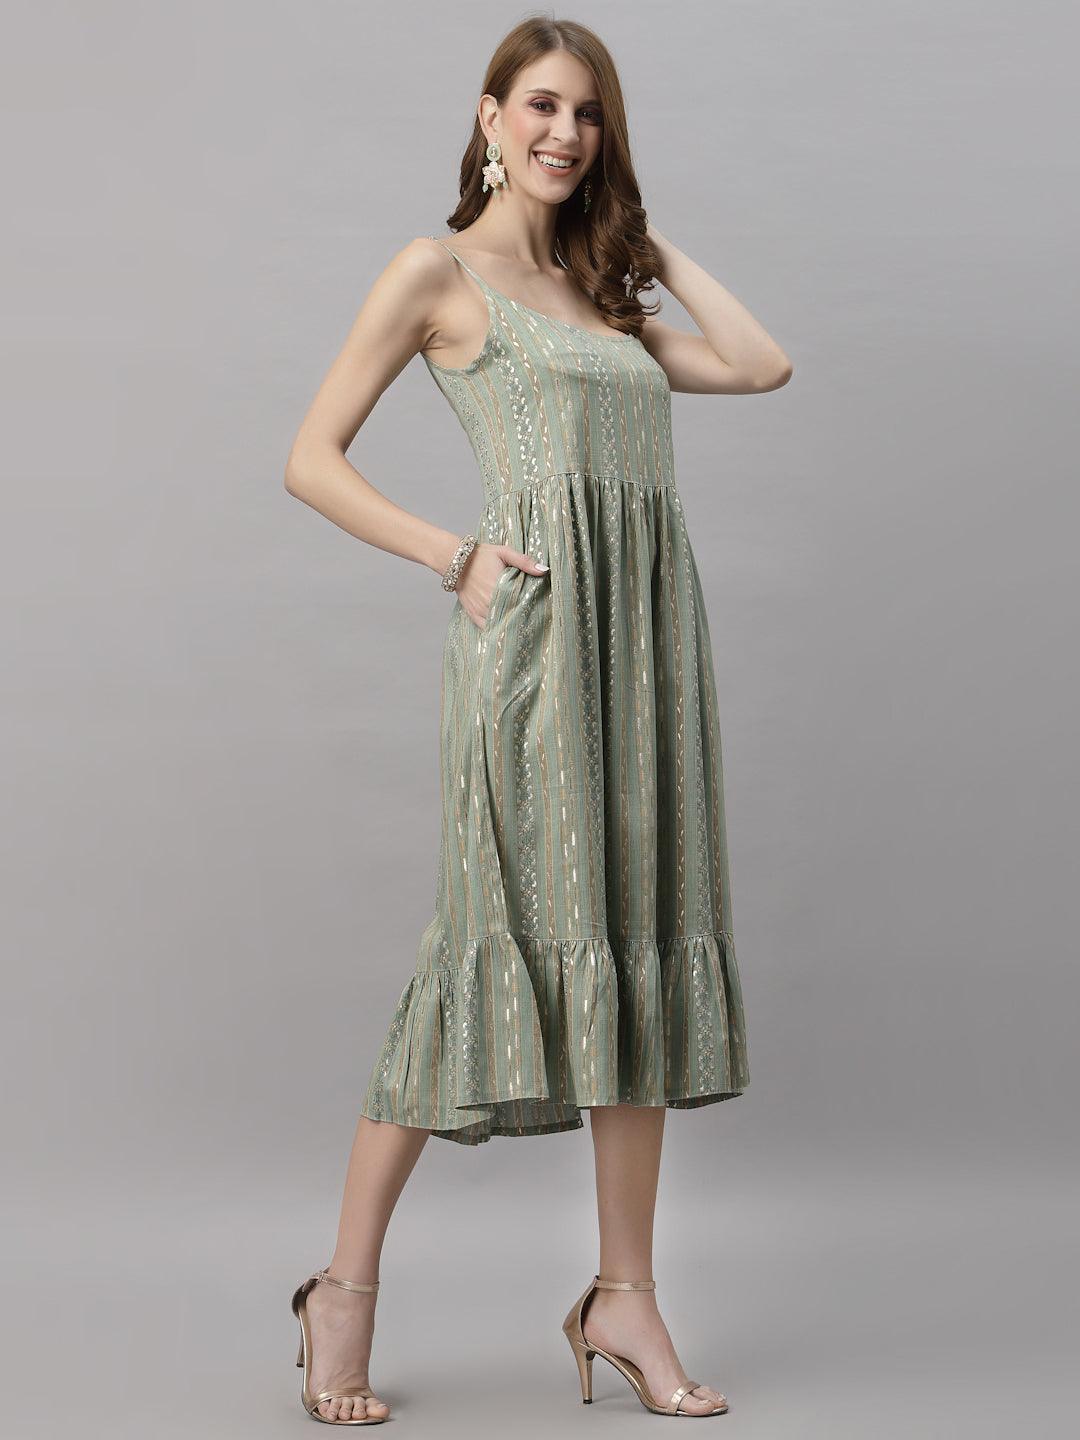 Lily Green Dress - Uboric